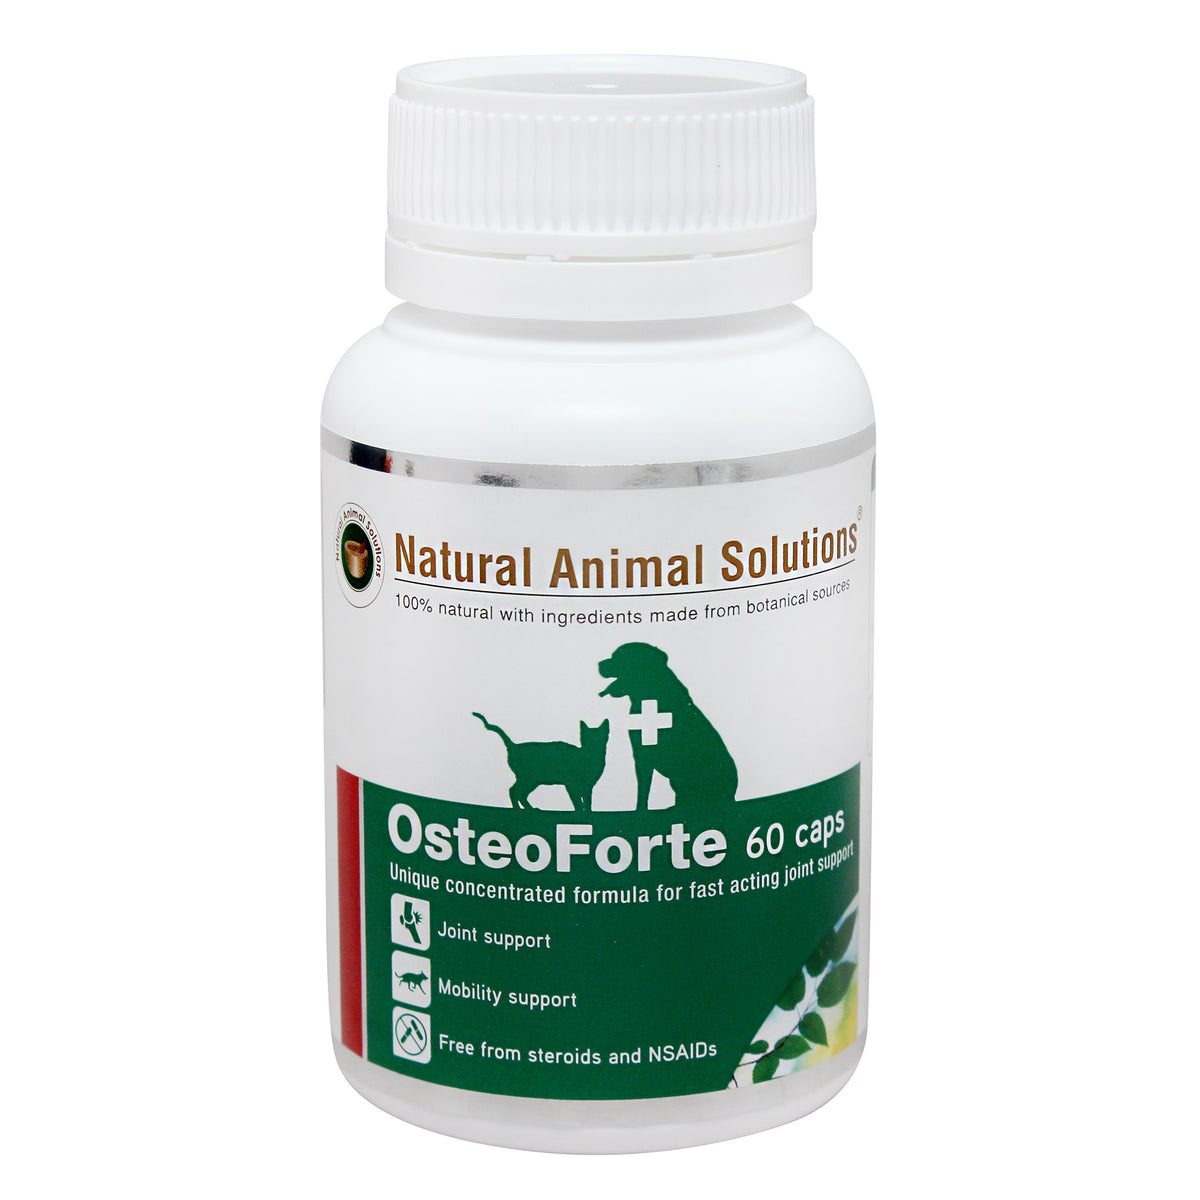 Natural Animal Solutions OsteoForte 60